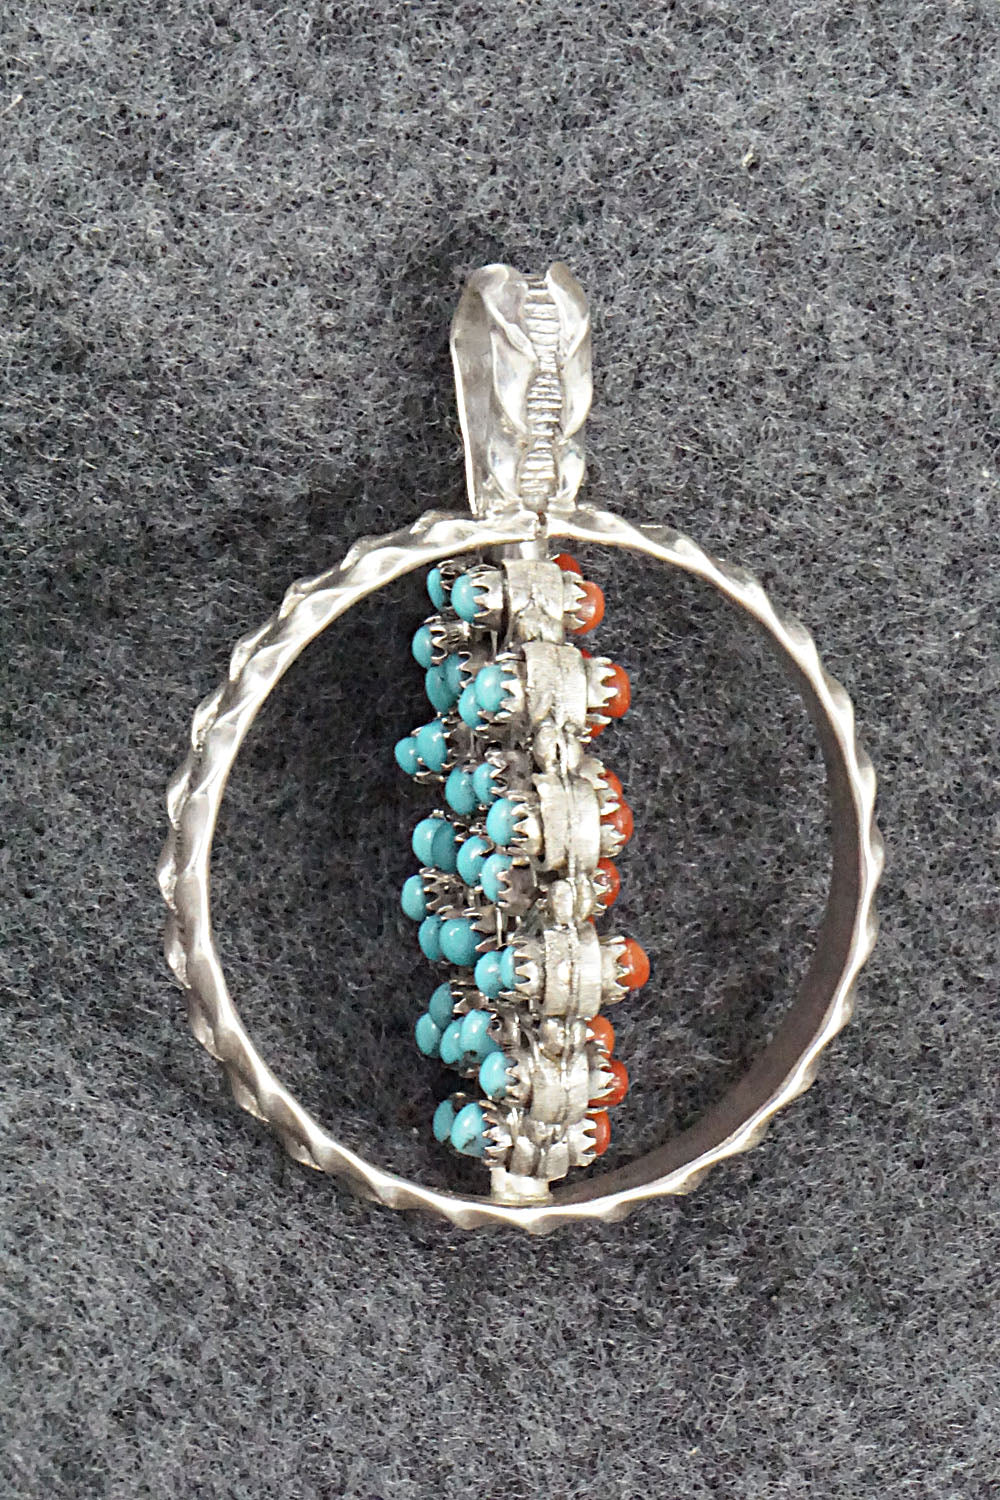 Coral, Turquoise & Sterling Silver Pendant - Wayne Johnson Sr.